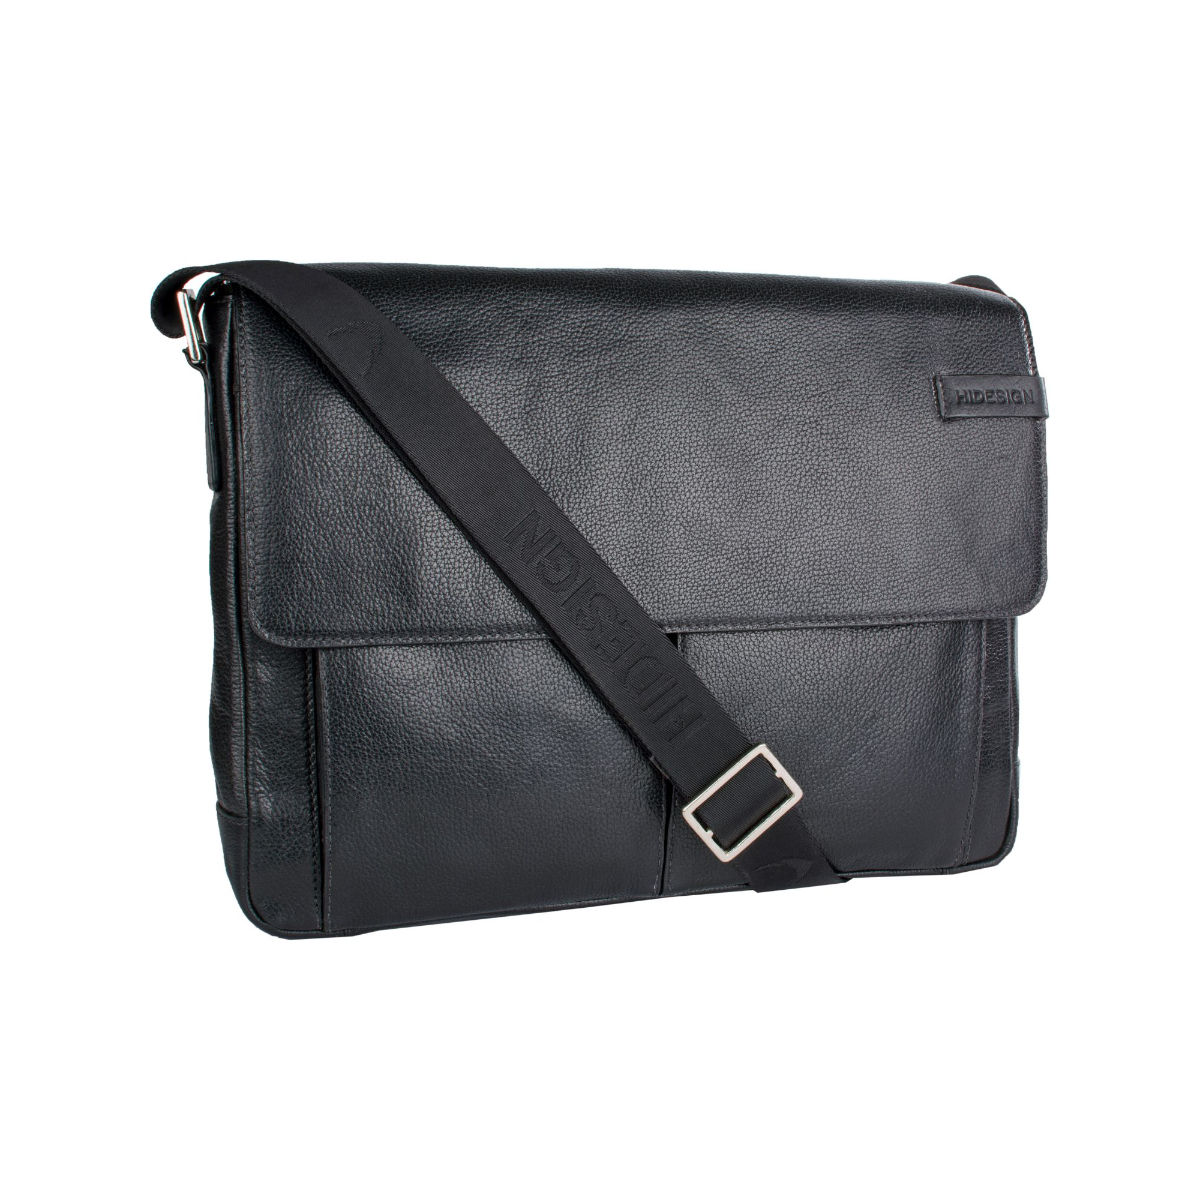 Hidesign Black Travolta 01 New Sib Reg Splt Messenger Bag: Buy Hidesign ...